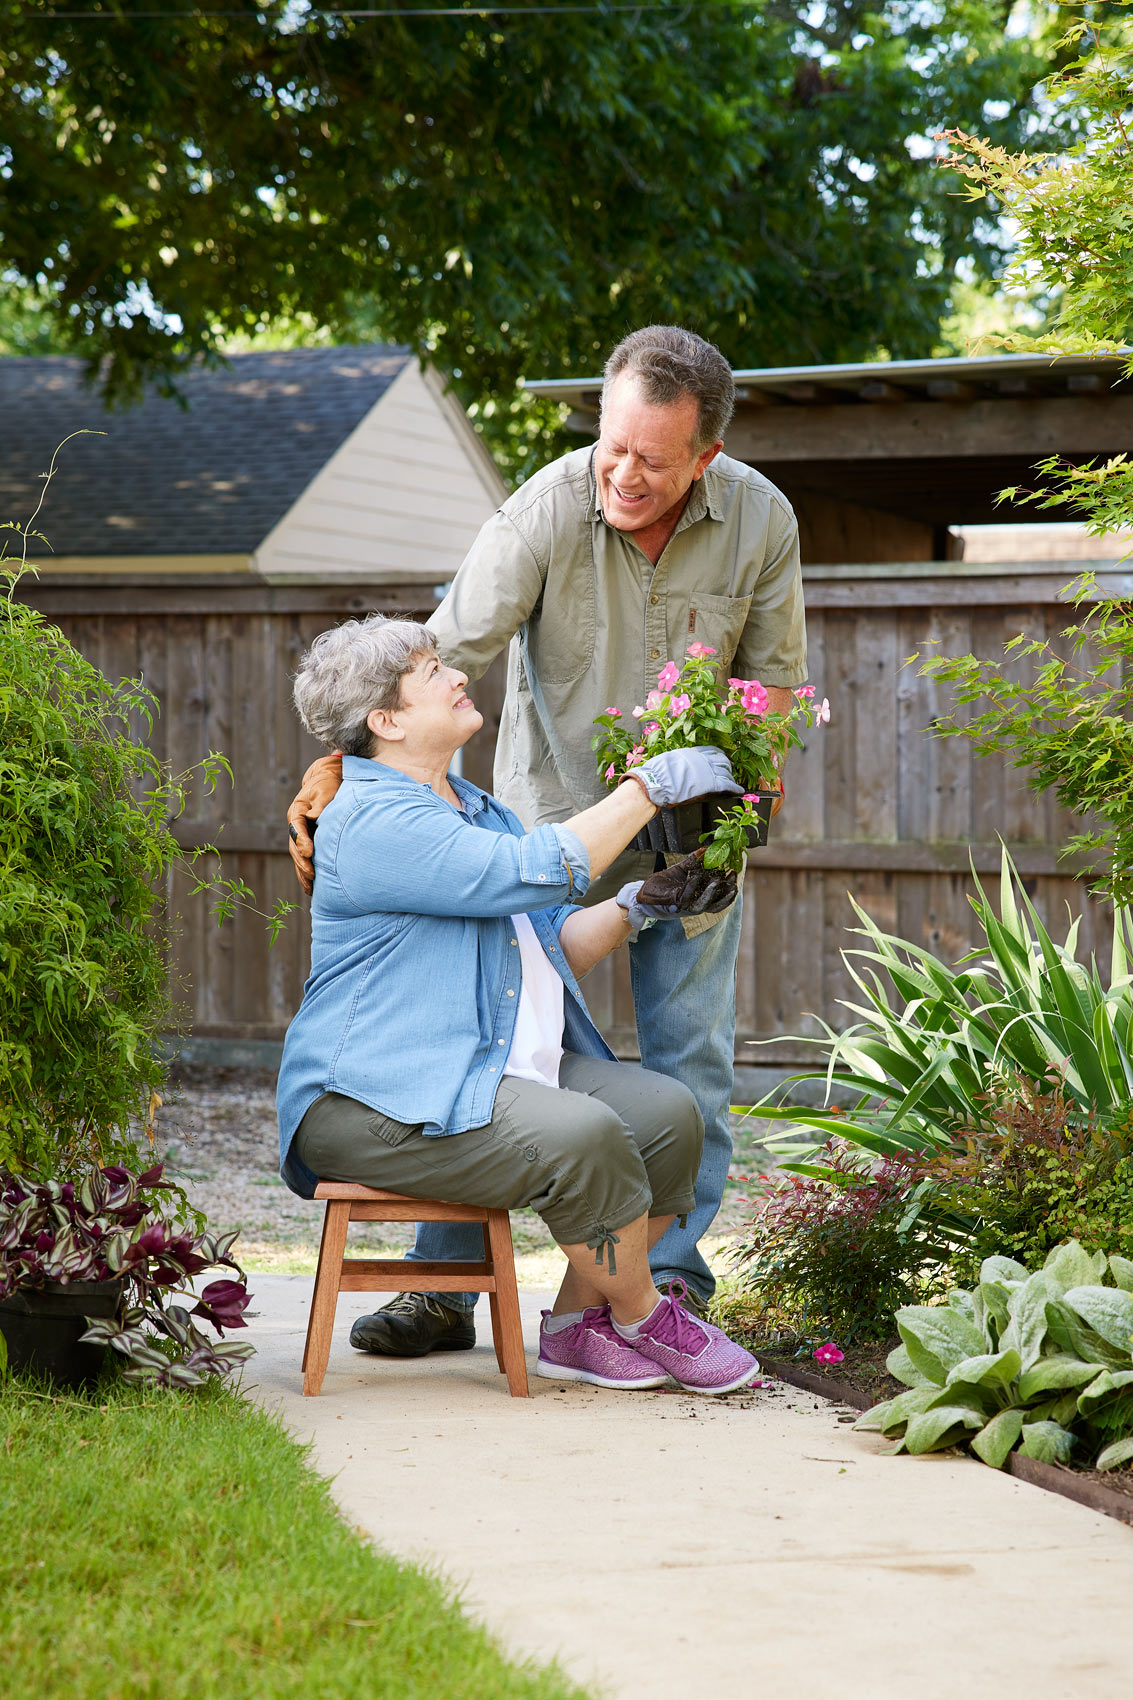 Outdoor lifestyle photograph senior couple gardening planting flowers.